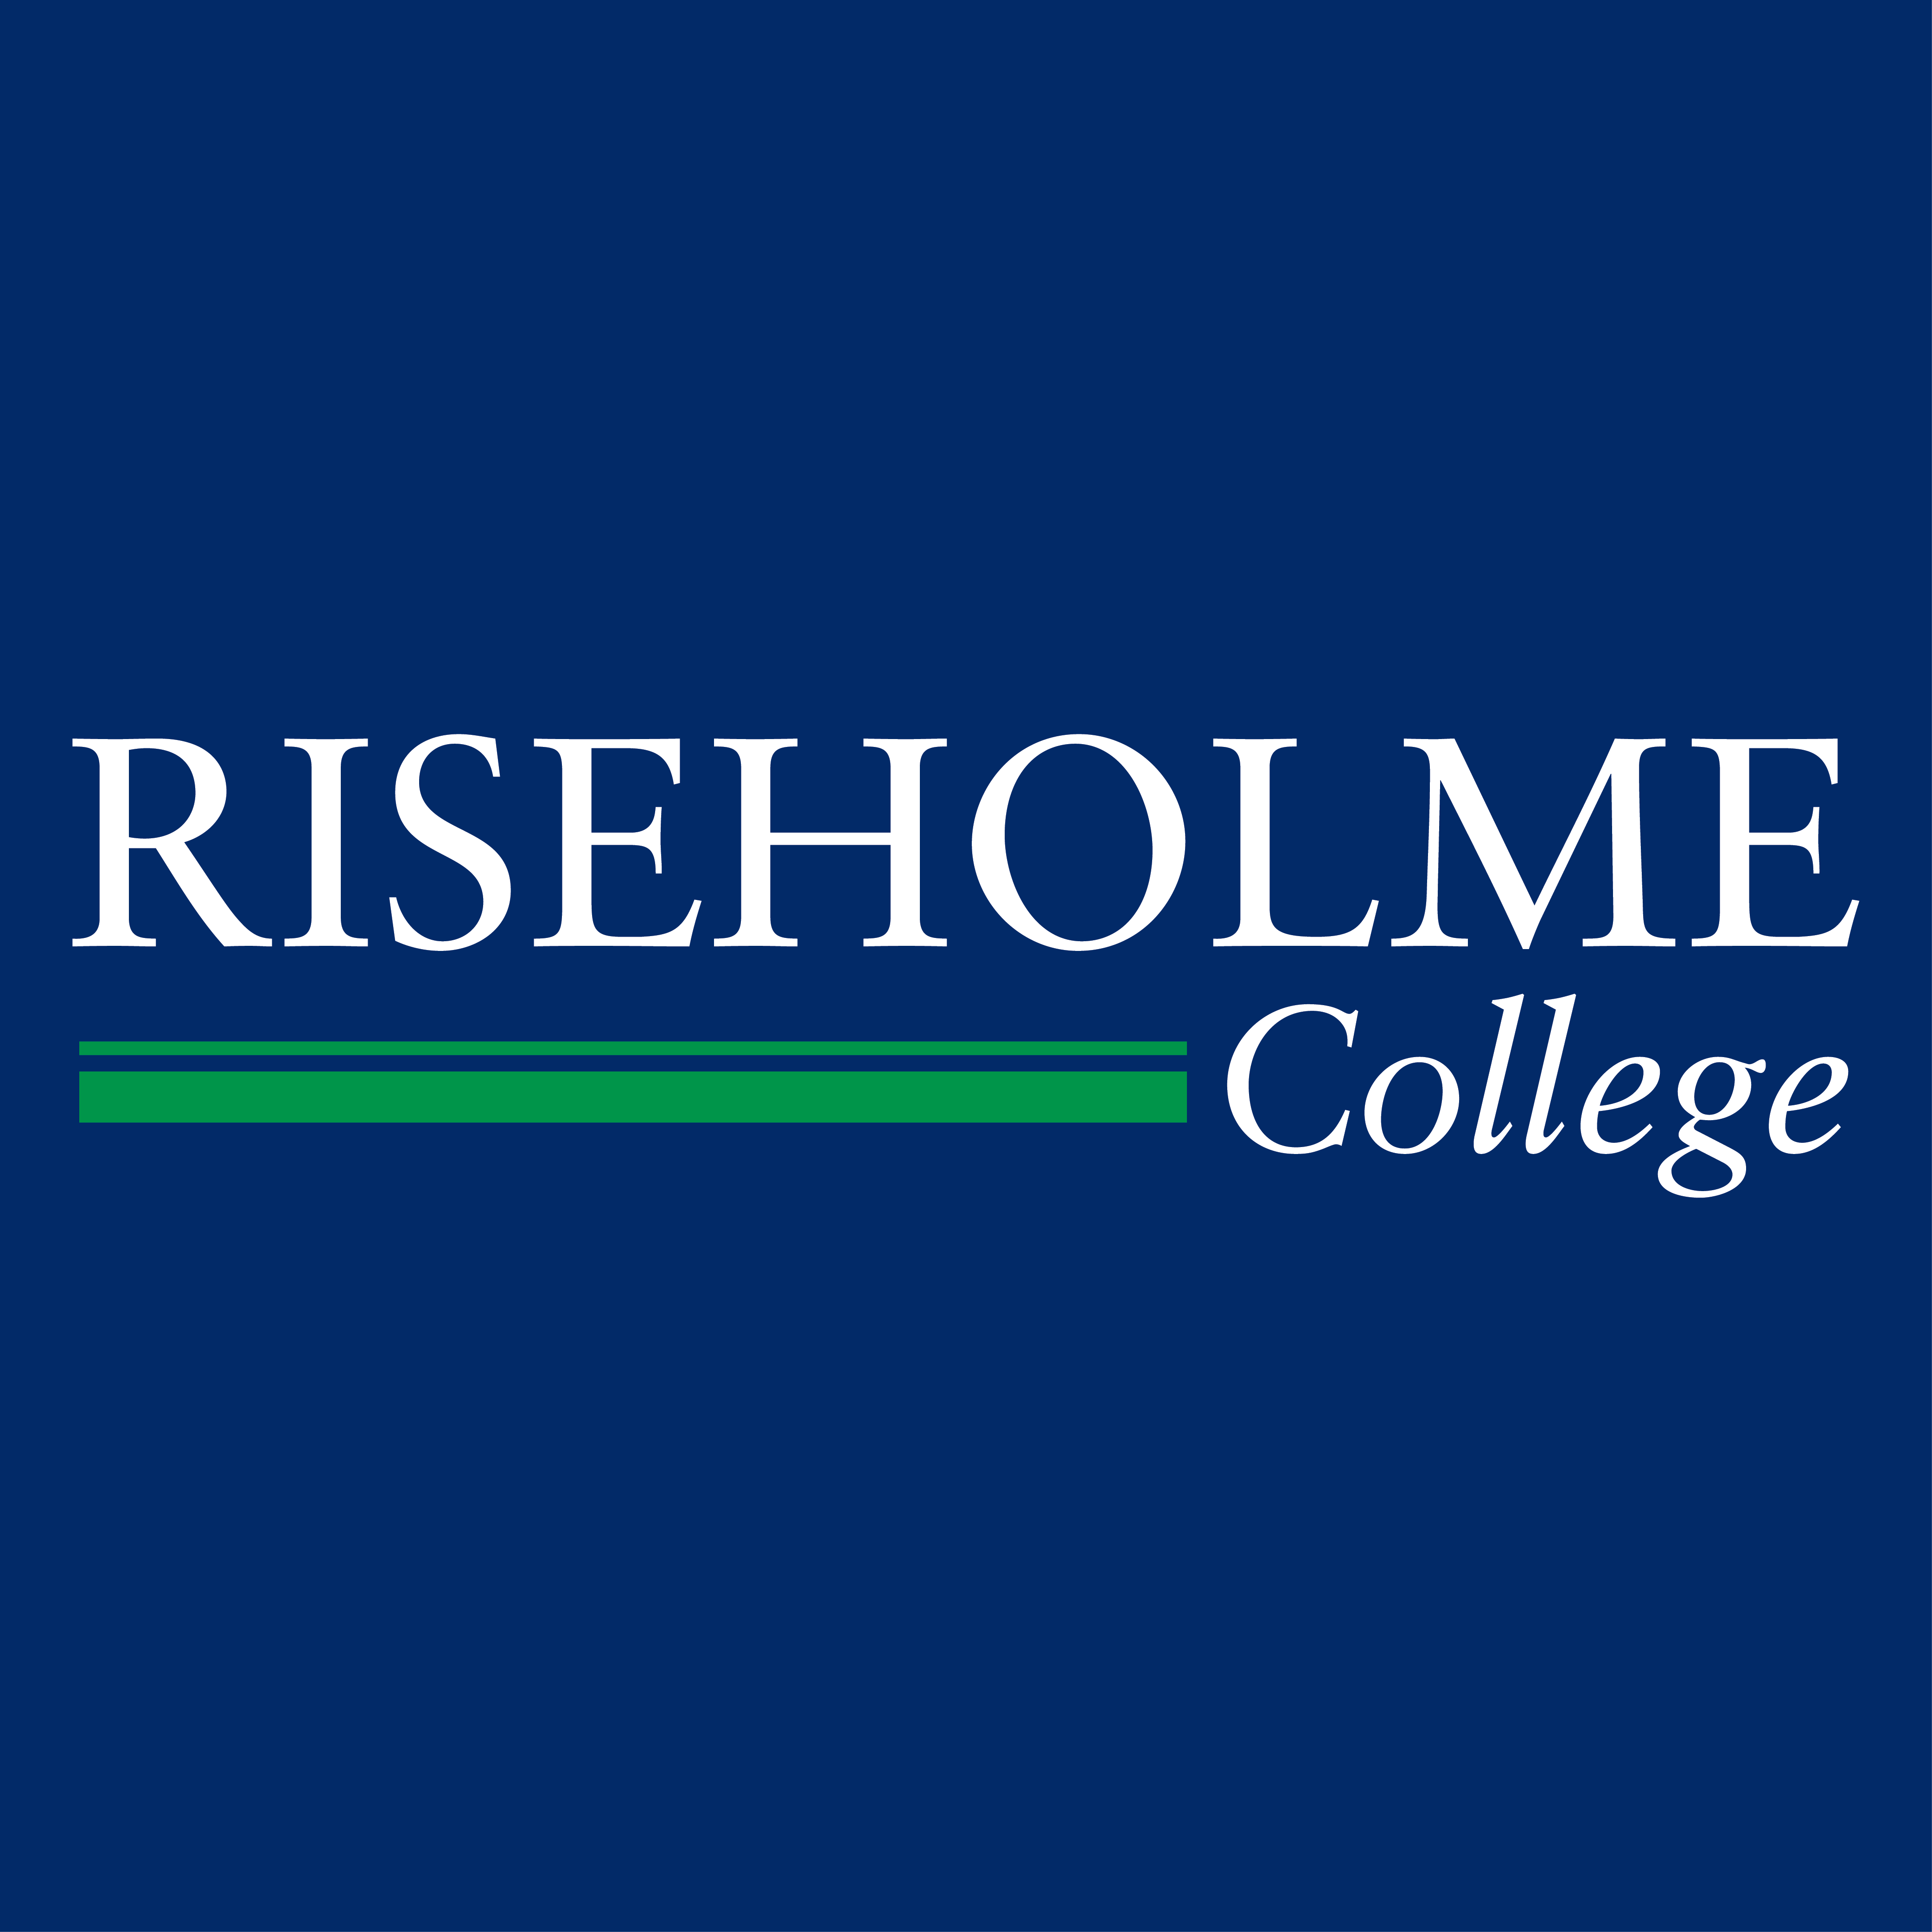 Riseholme college logo